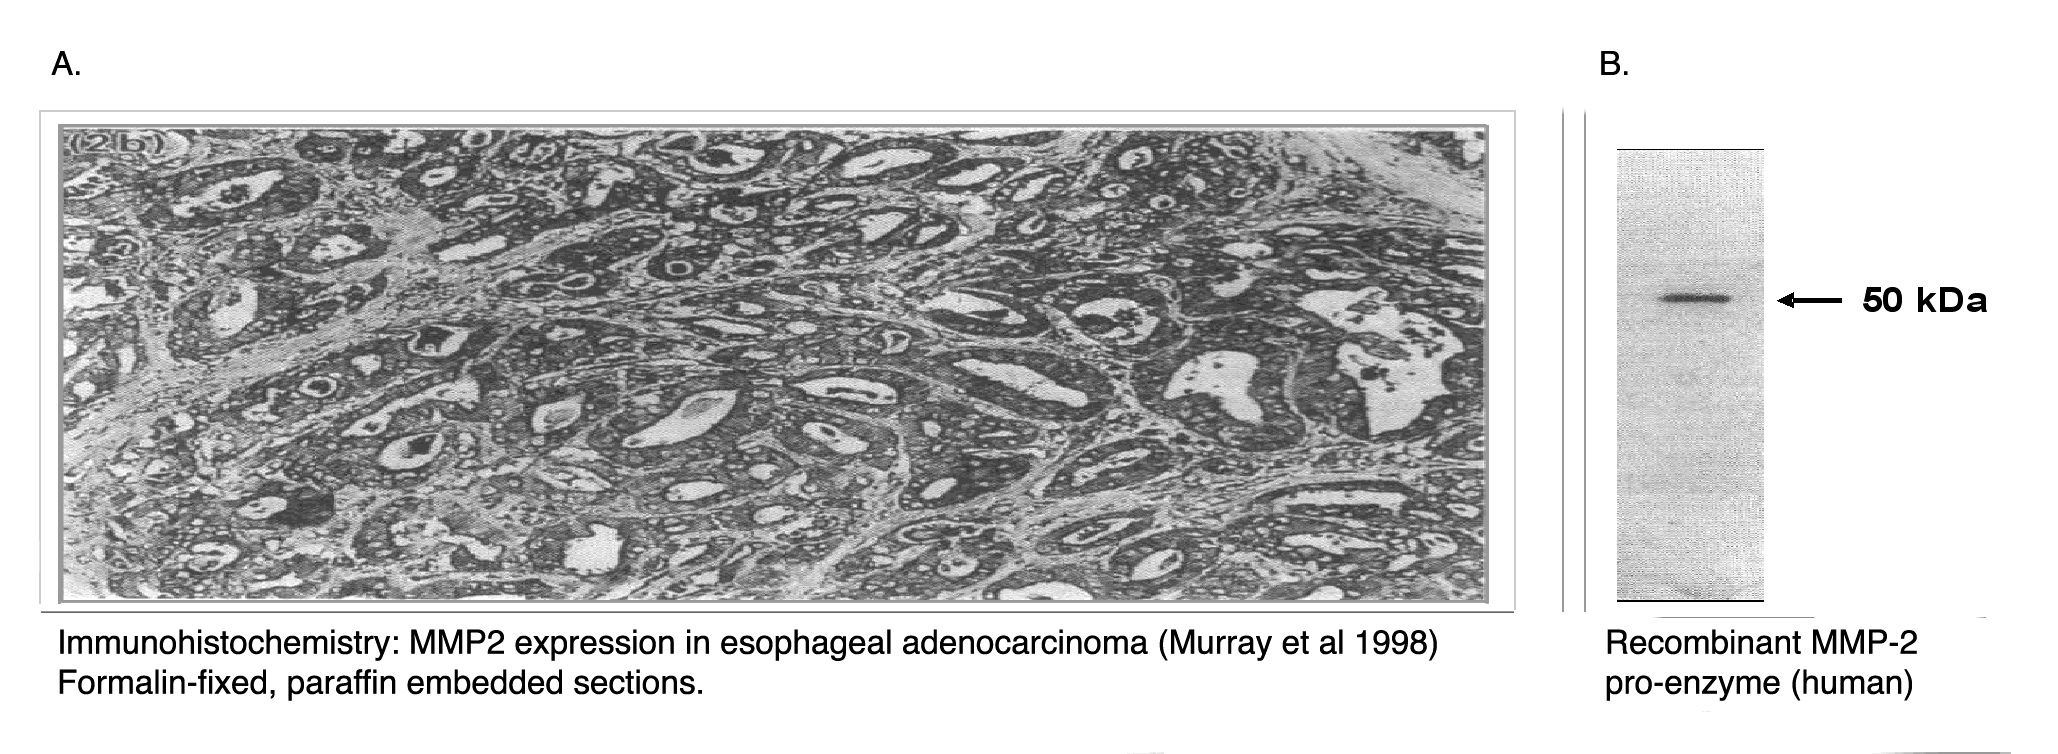 "A. Immunohistochemical staining of human oesophageal adenocarcinoma tissue using MMP-2 antibody (Cat. No. X2054M).
B.  Western blot using MMP-2 antibody on recombinant MMP-2 proenzyme (400 ng/lane). "